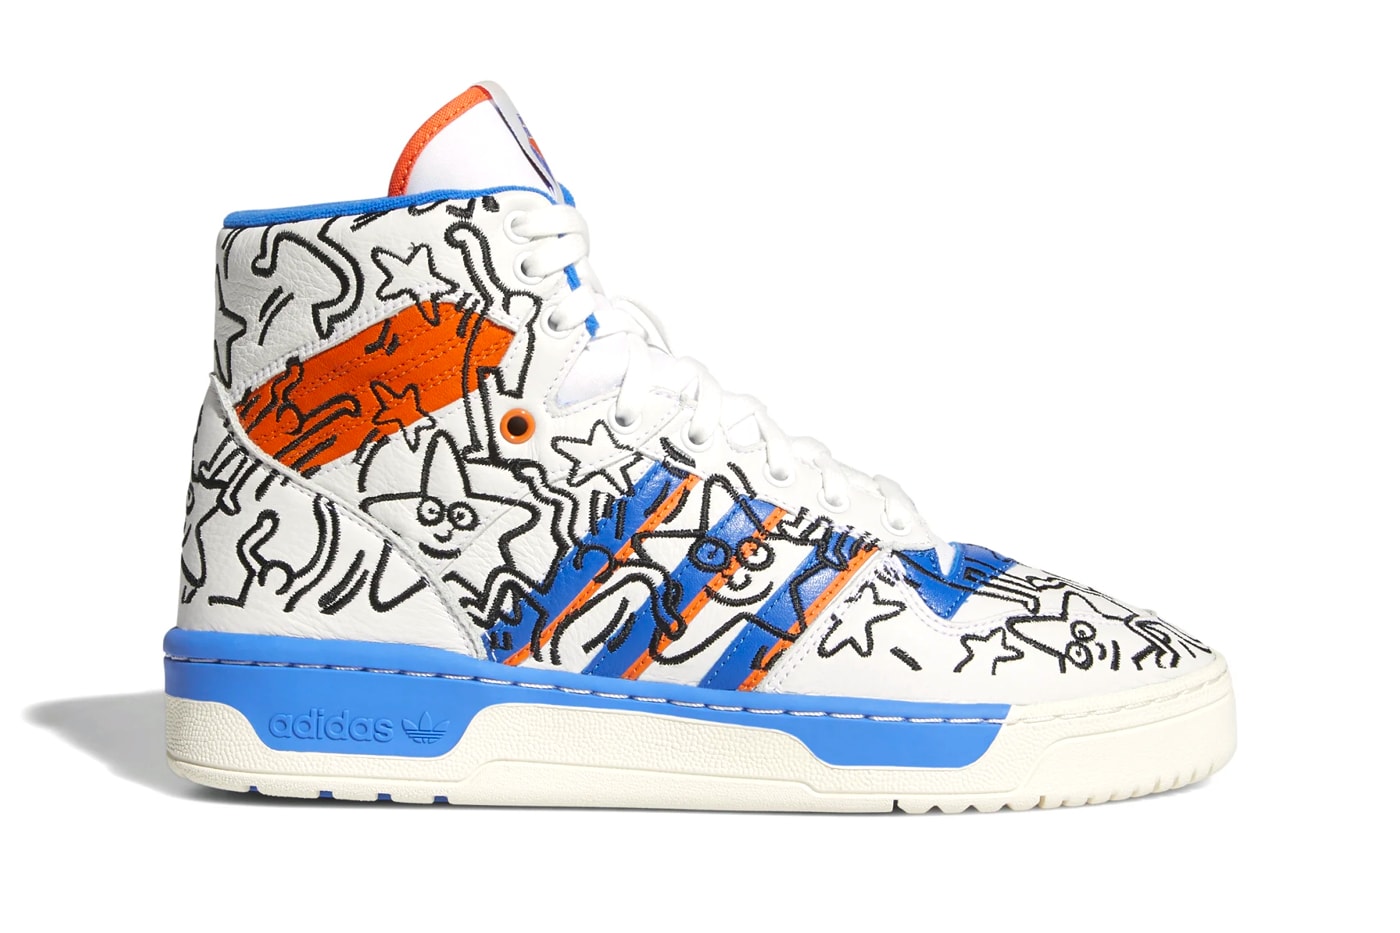 adidas Keith Haring Collaborative Capsule Info nizza rivalry hi stan smith sneakers graffiti pop art shoes 